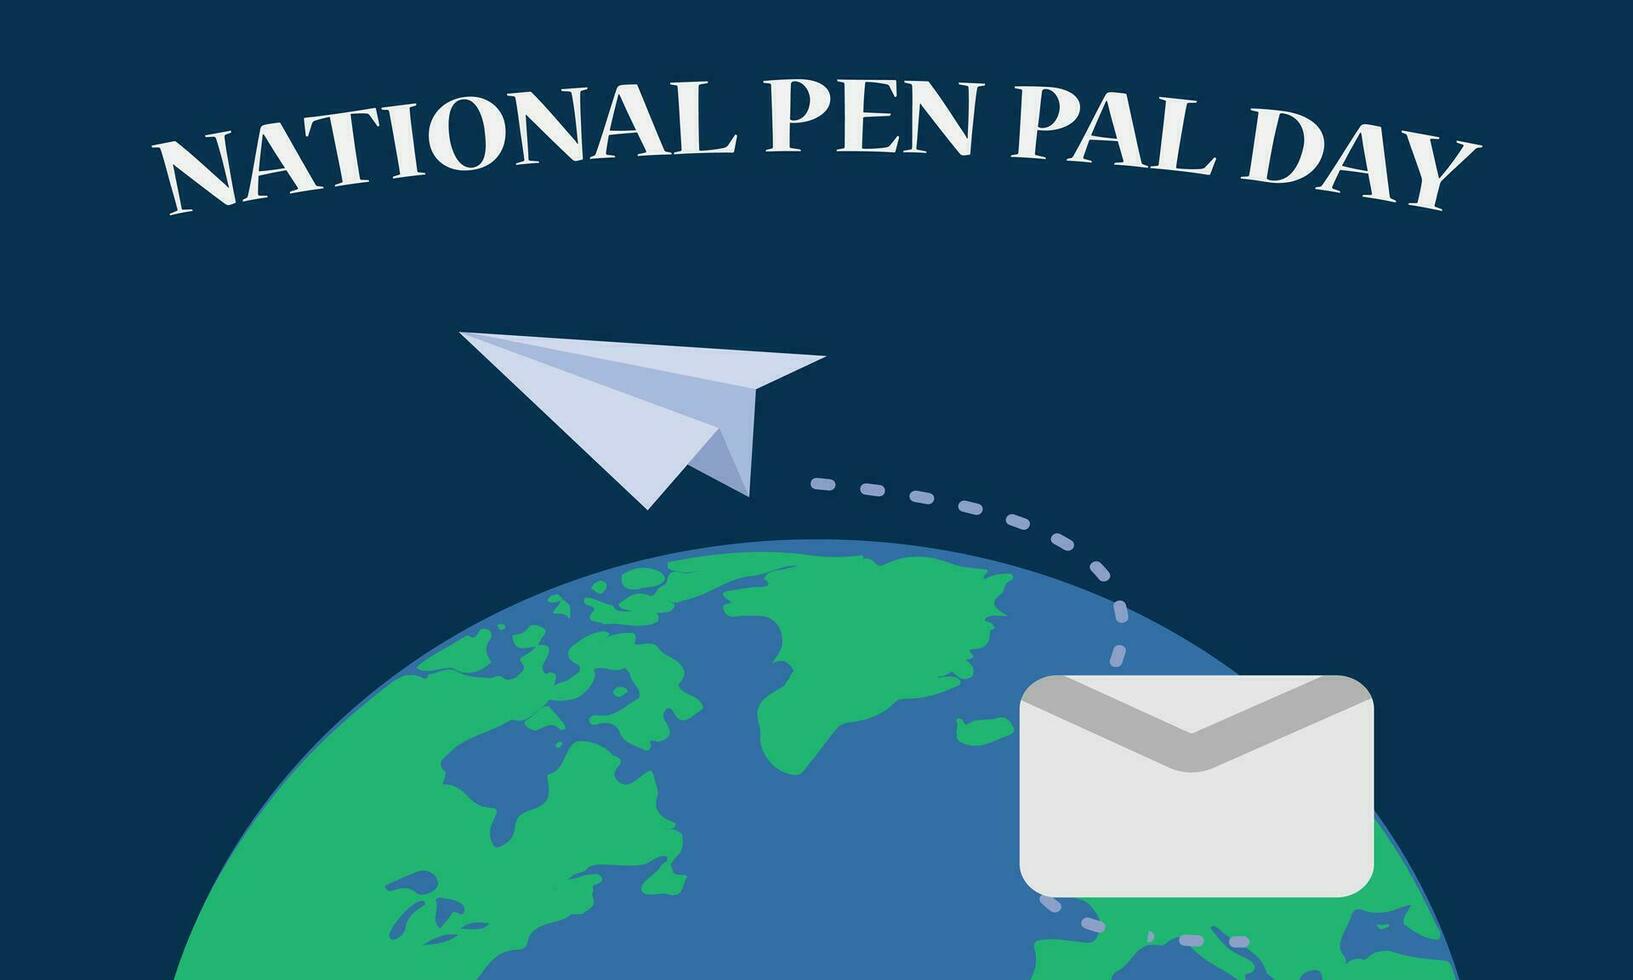 national pen pal day poster, banner background vector